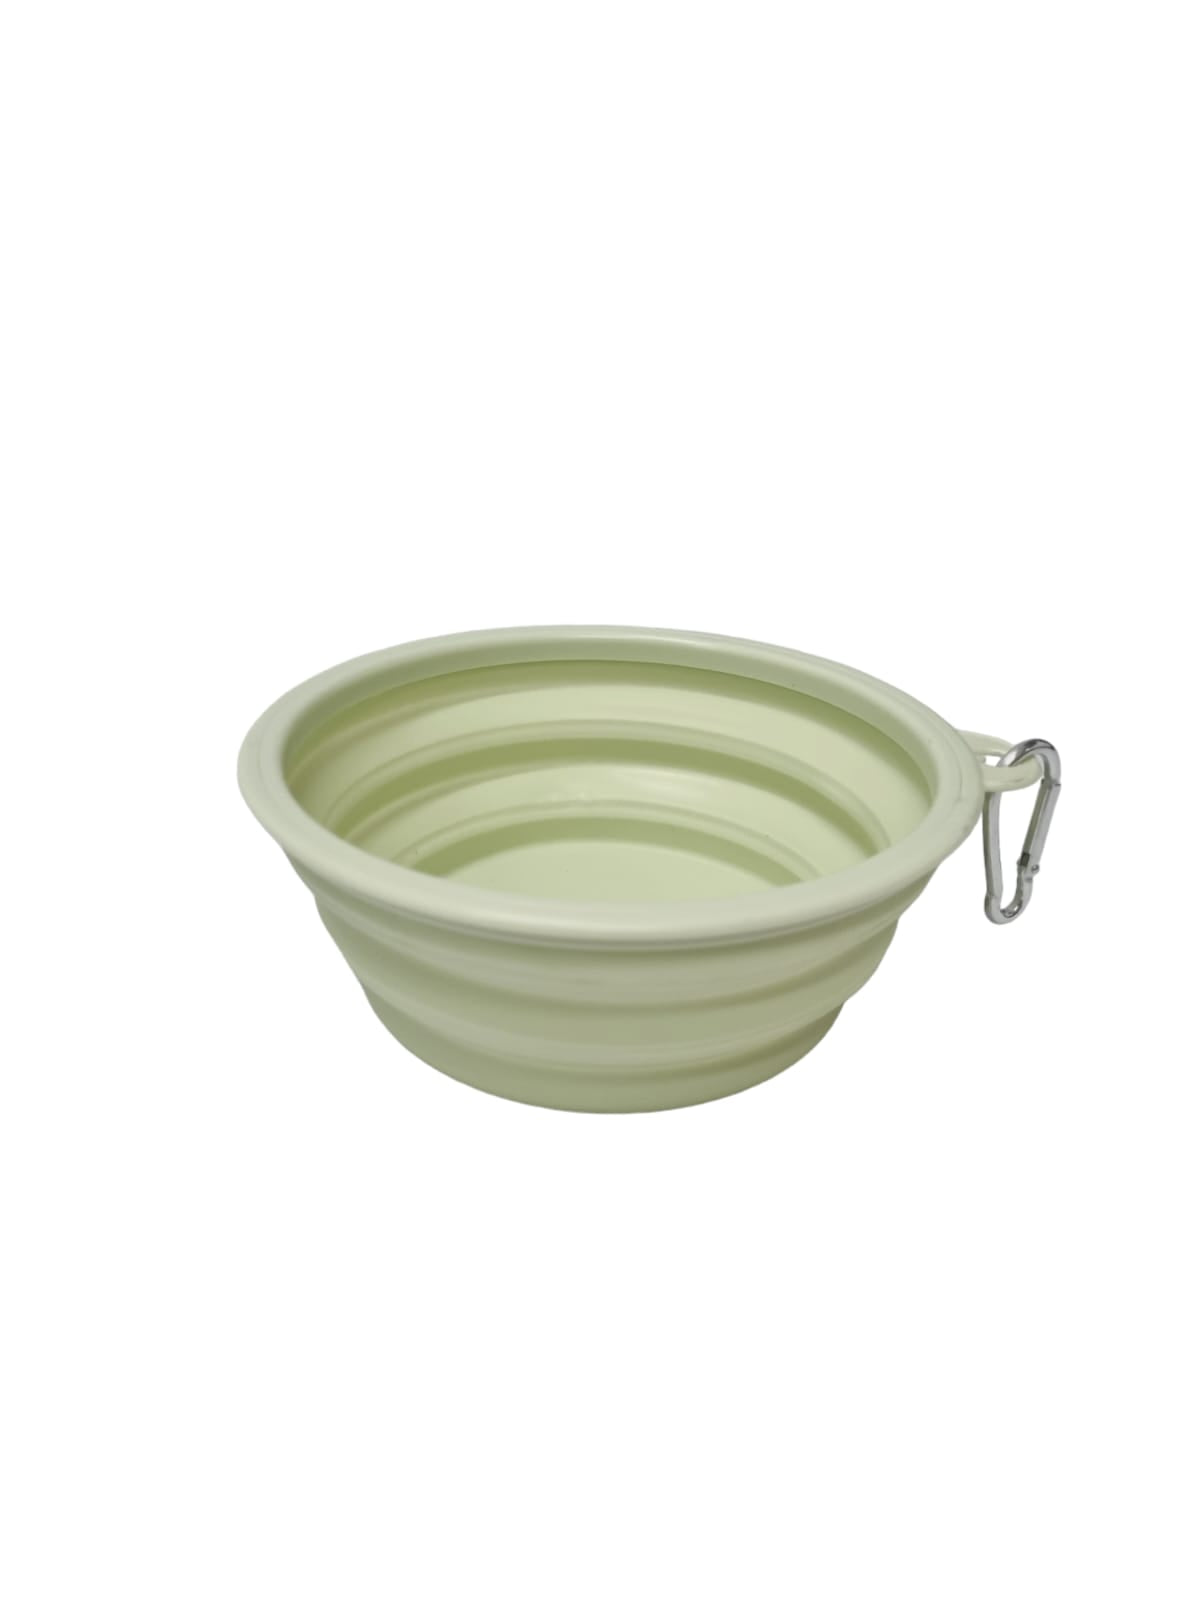 Medium (650ml) Foldable Dog Bowl - Light Green